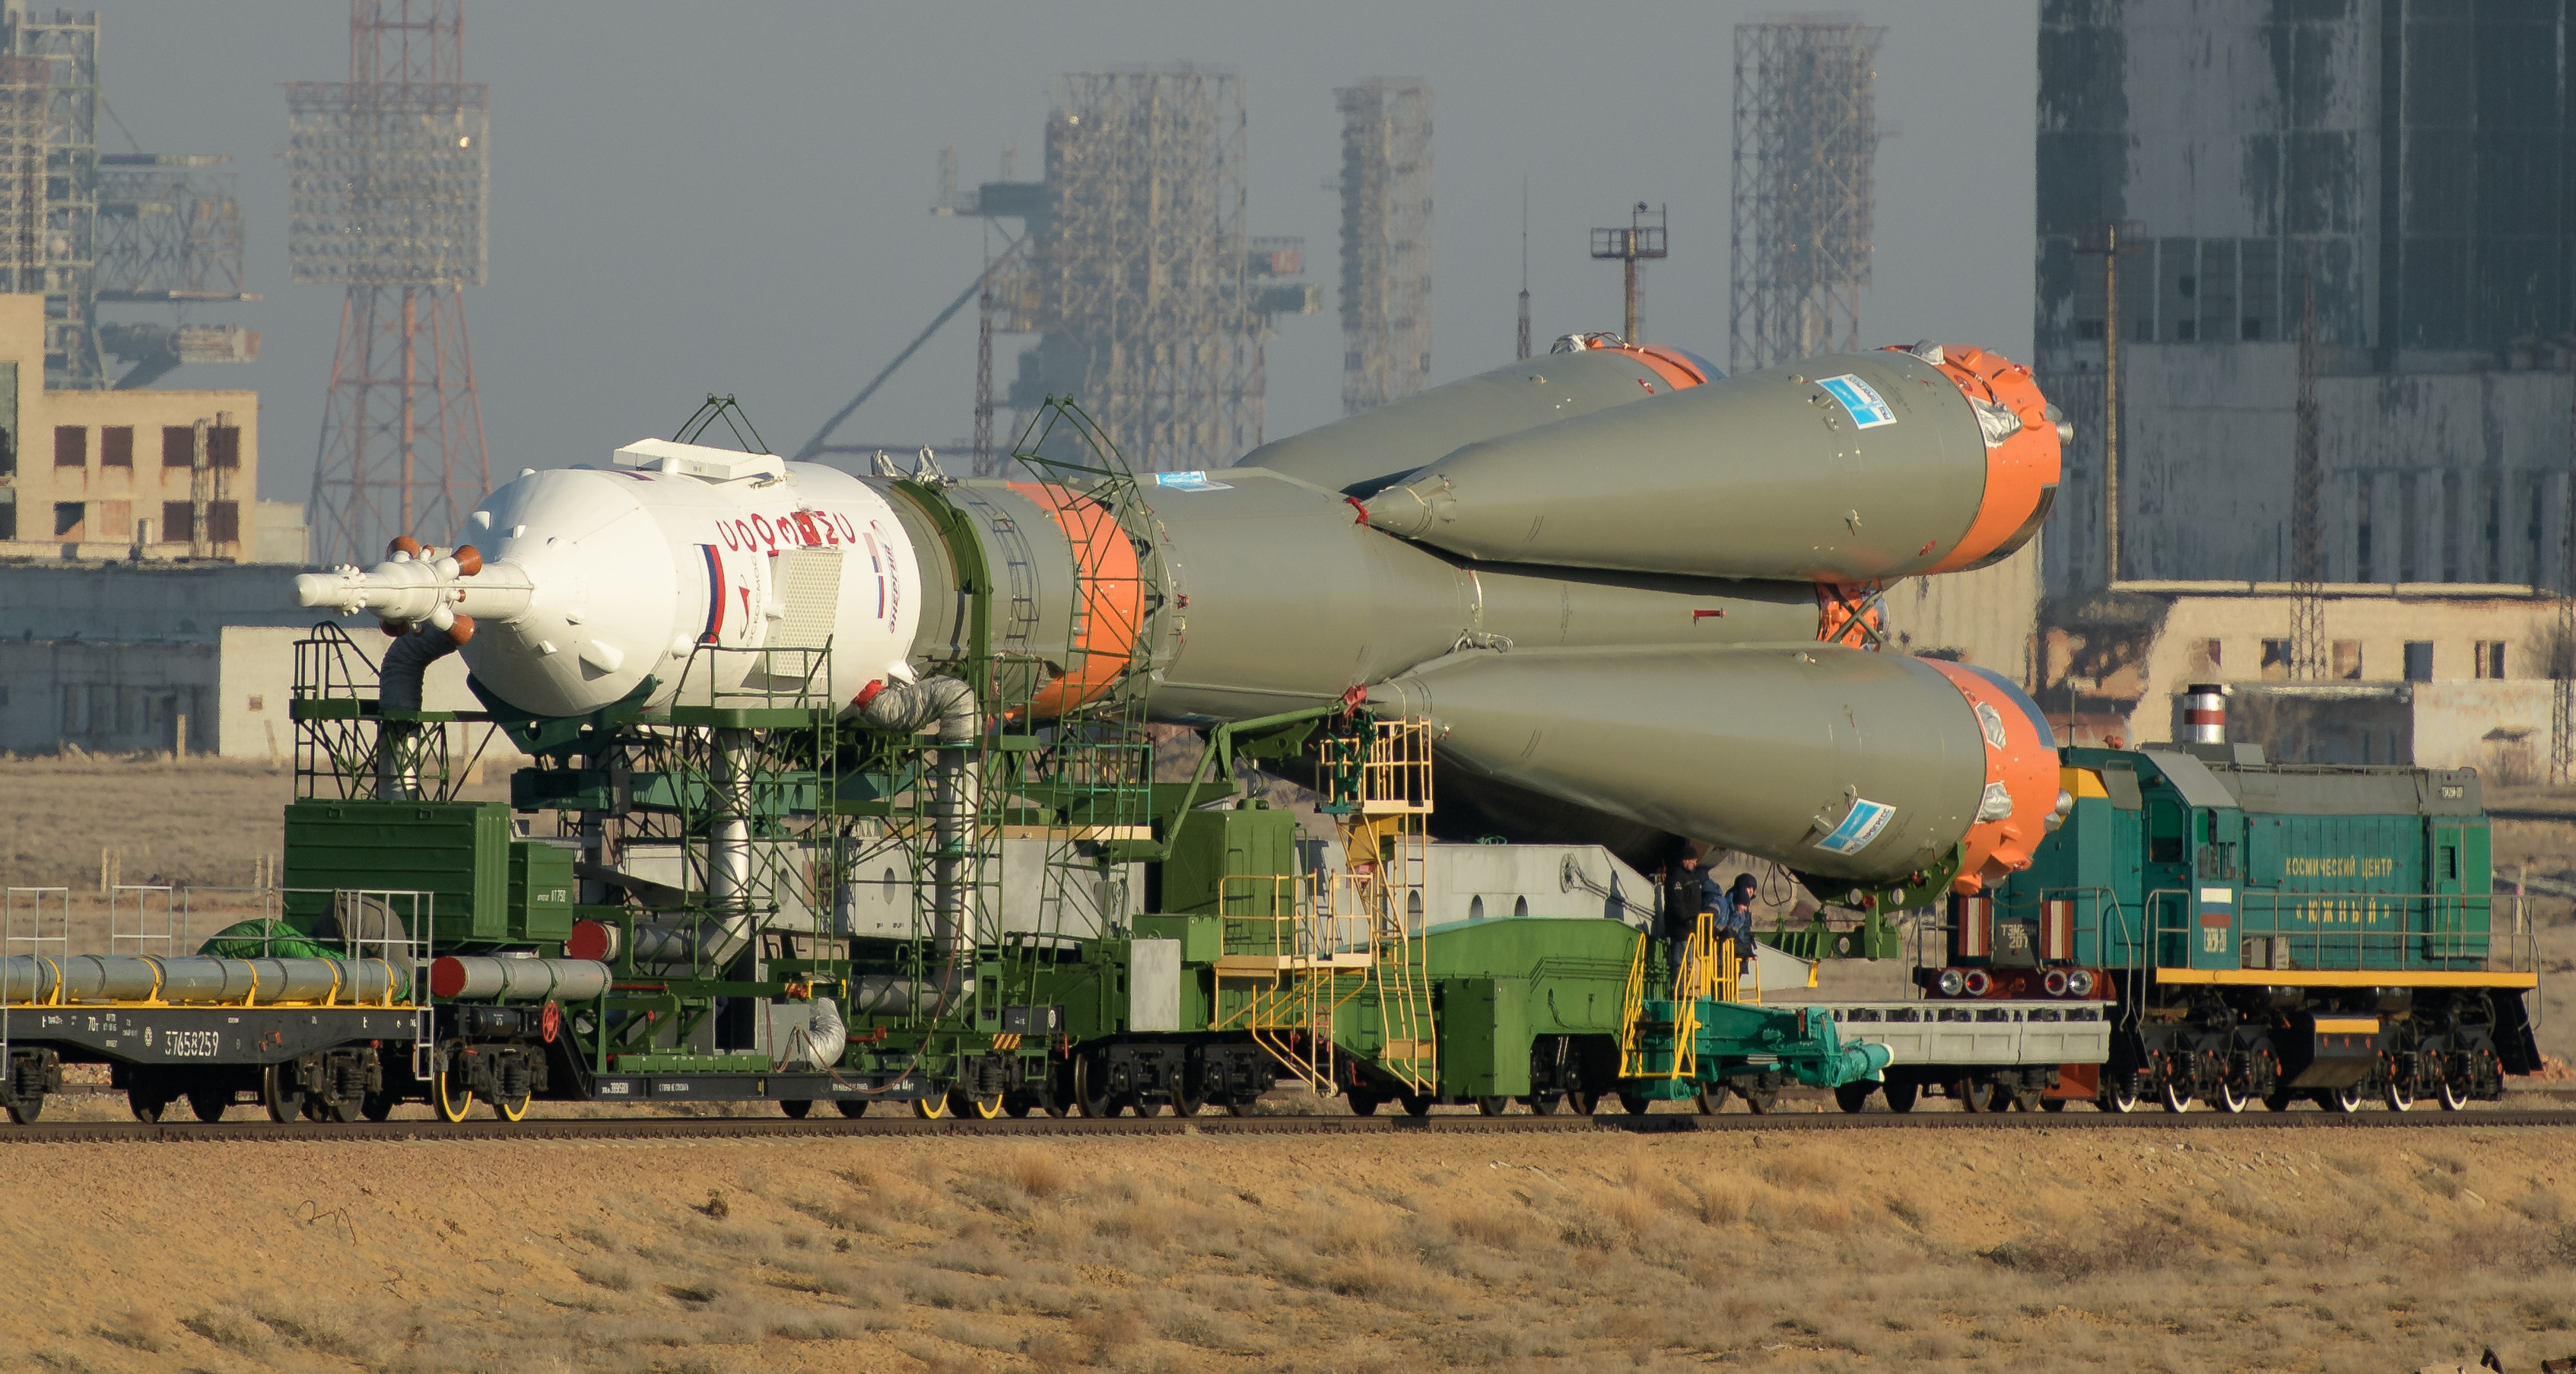 Soyuz rocket, Baikonur Cosmodrome